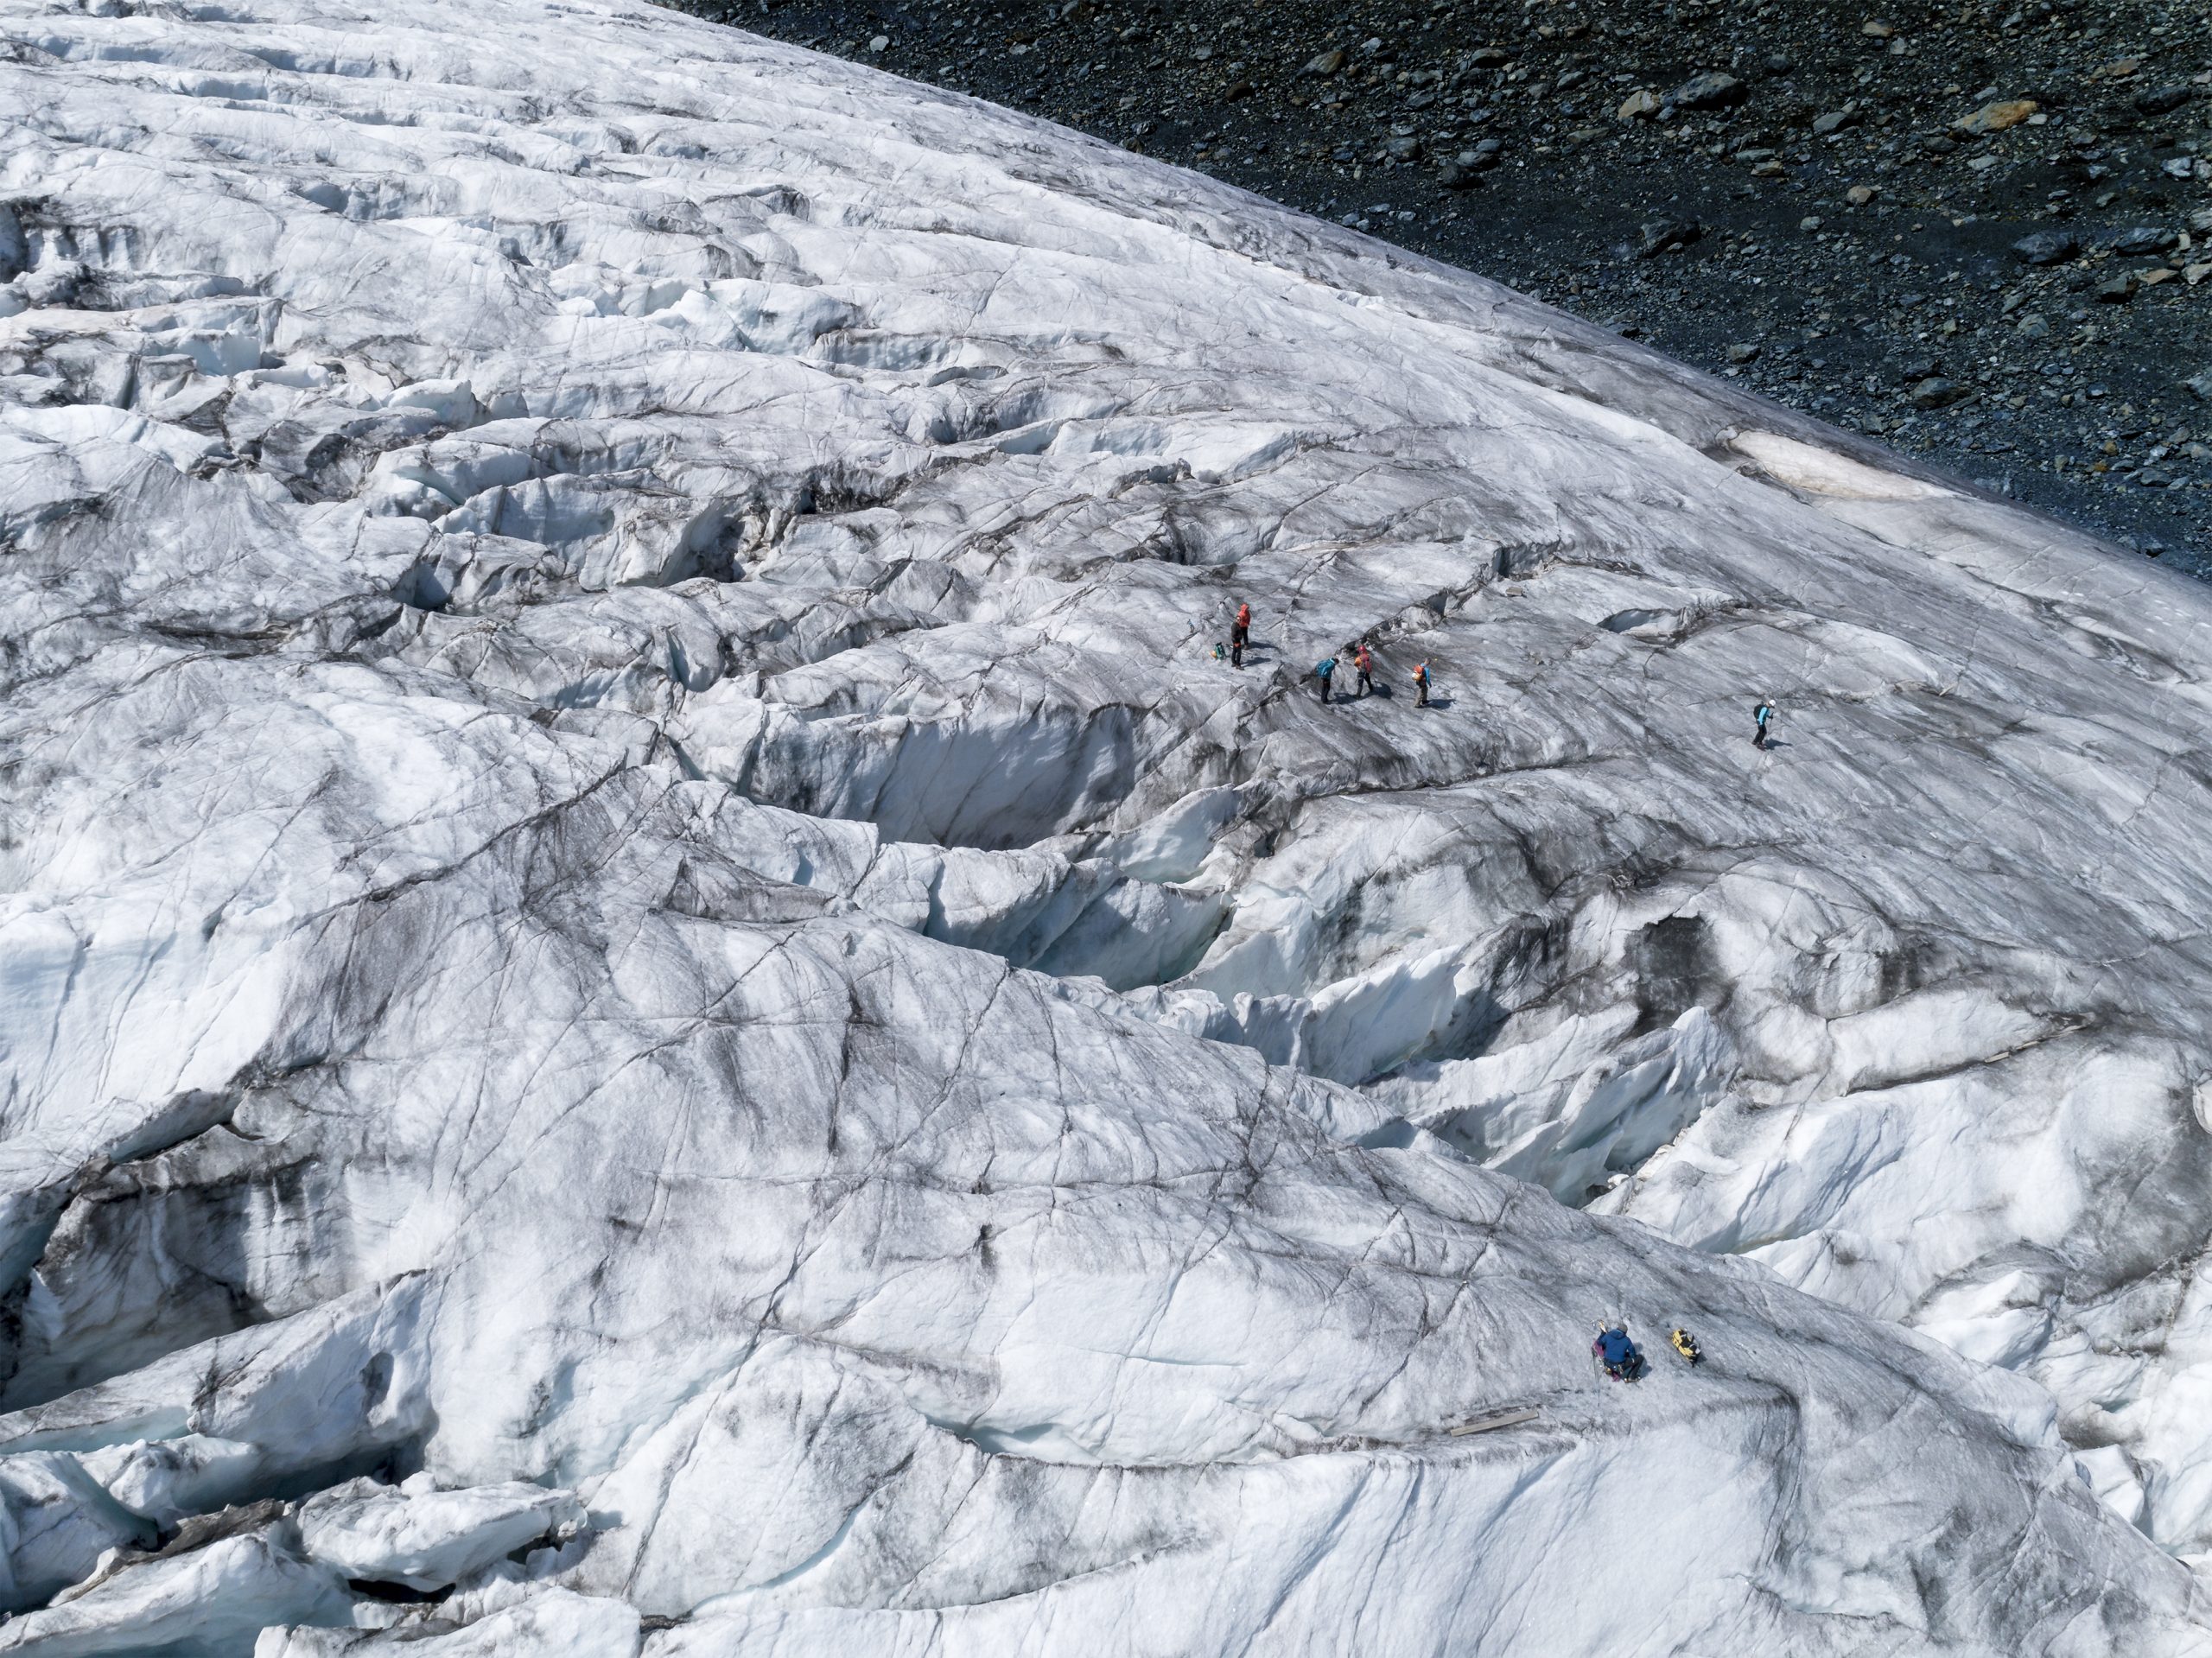   #395 Glaciers, Unterer-Theodulgletscher, 2018, 45°57’45.335″N 7°43’53.322″E
